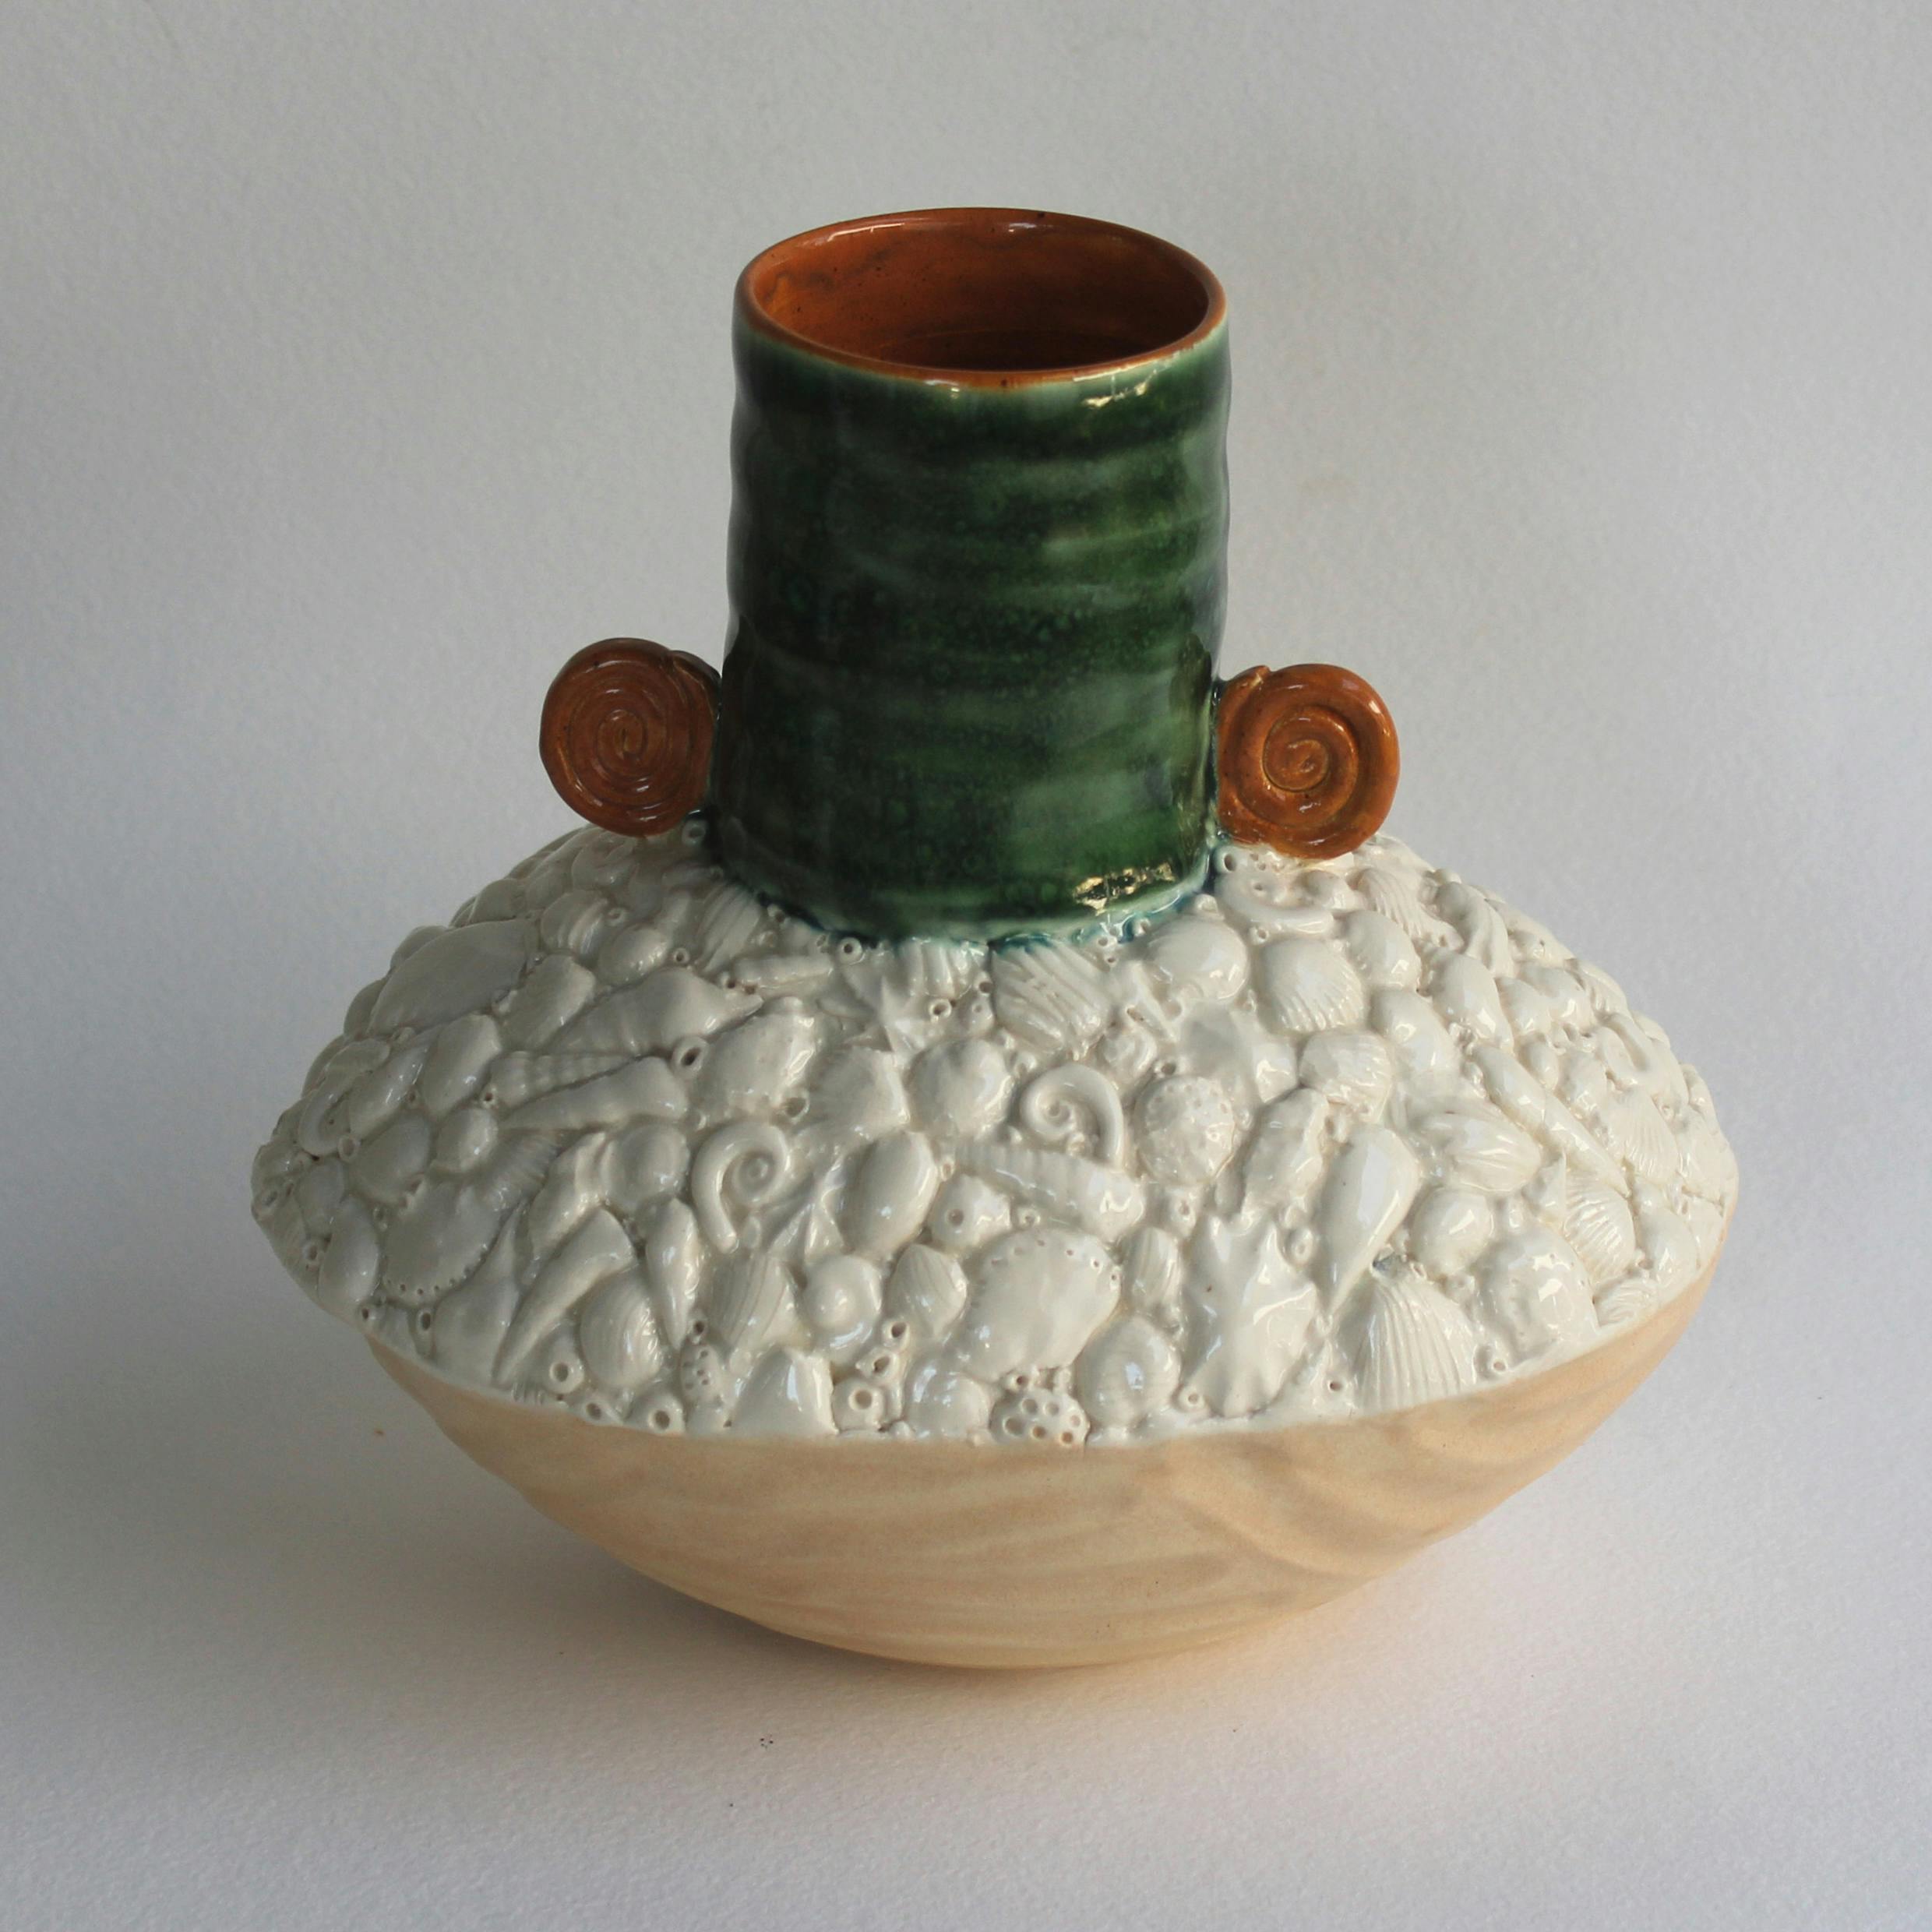 44 Carol Forster - Shelly Beach Vase